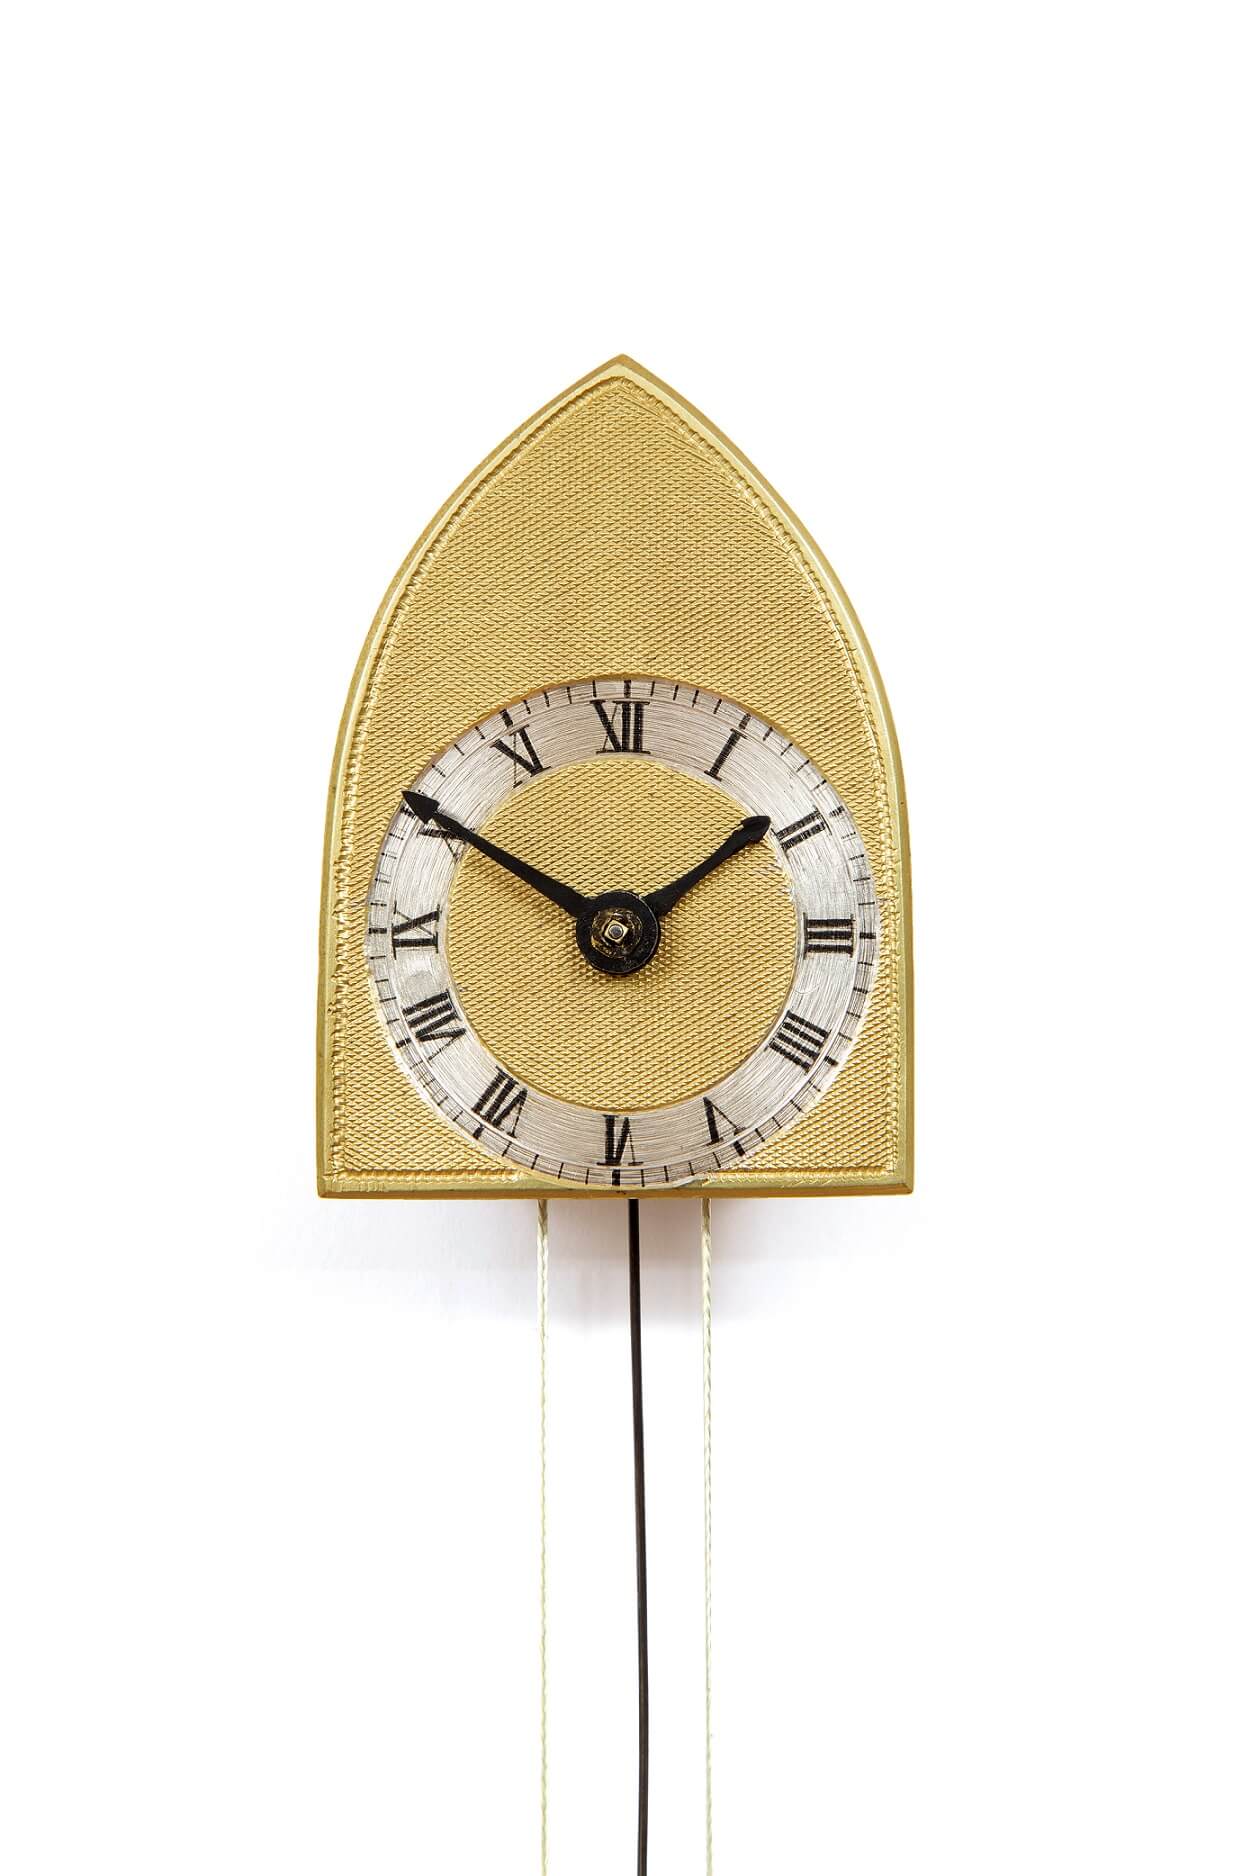 Austrian-antique-clock-brettl-neo-gothic-brass-timepiece-miniature-arched-